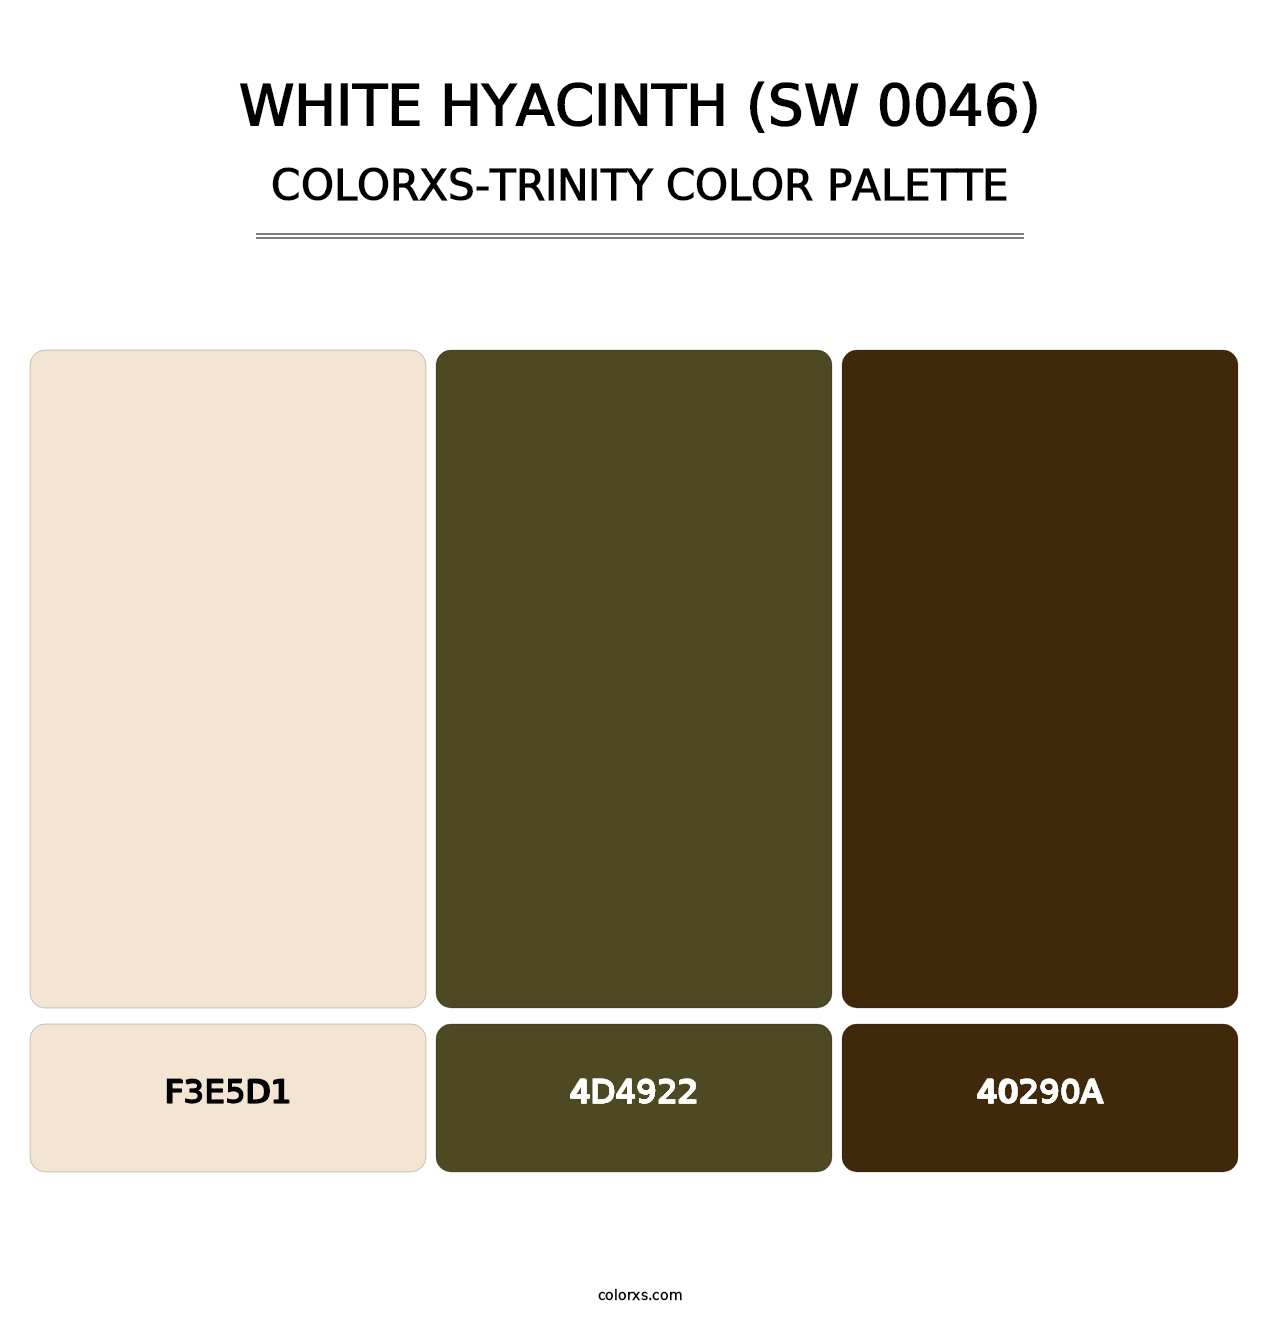 White Hyacinth (SW 0046) - Colorxs Trinity Palette